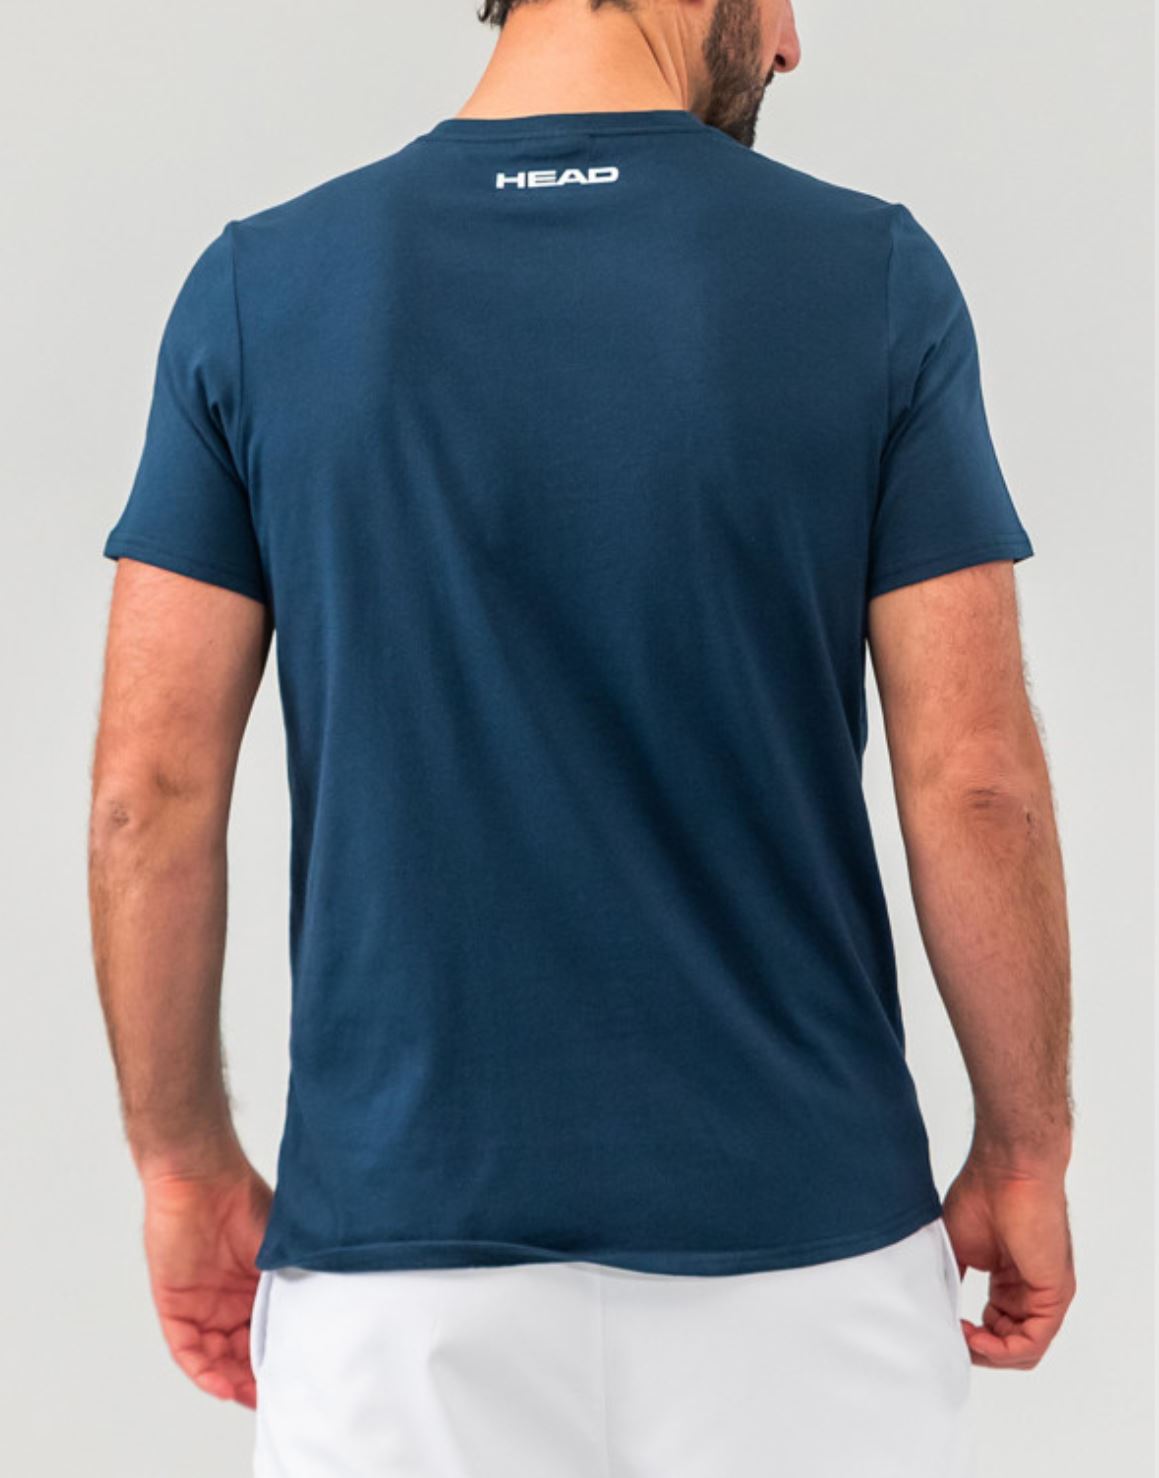 Head T-shirt (Blue)